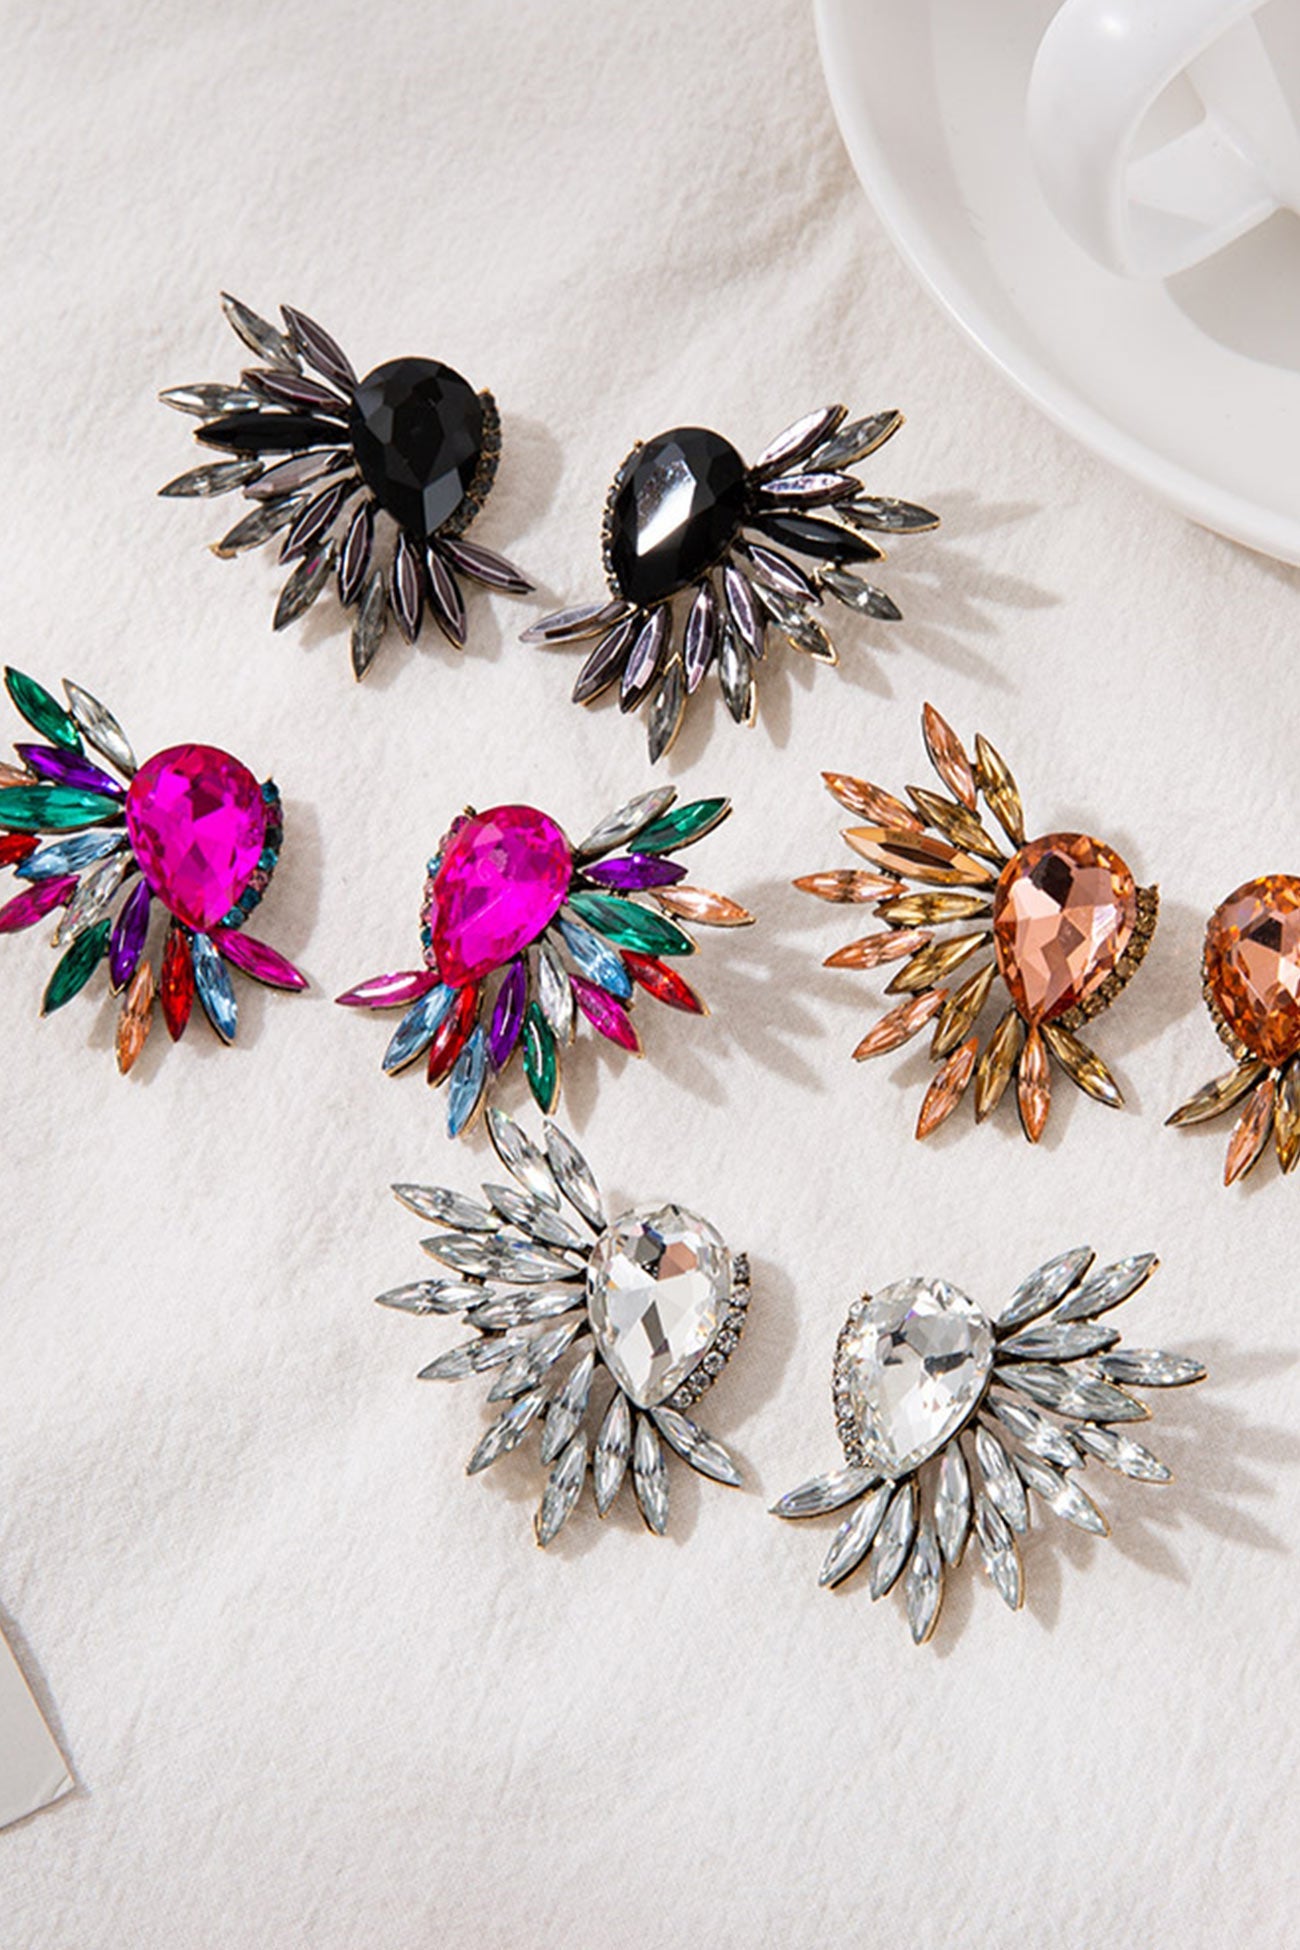 Flytonn-Valentine's Day gift Rhinestone Wing Shape Earrings